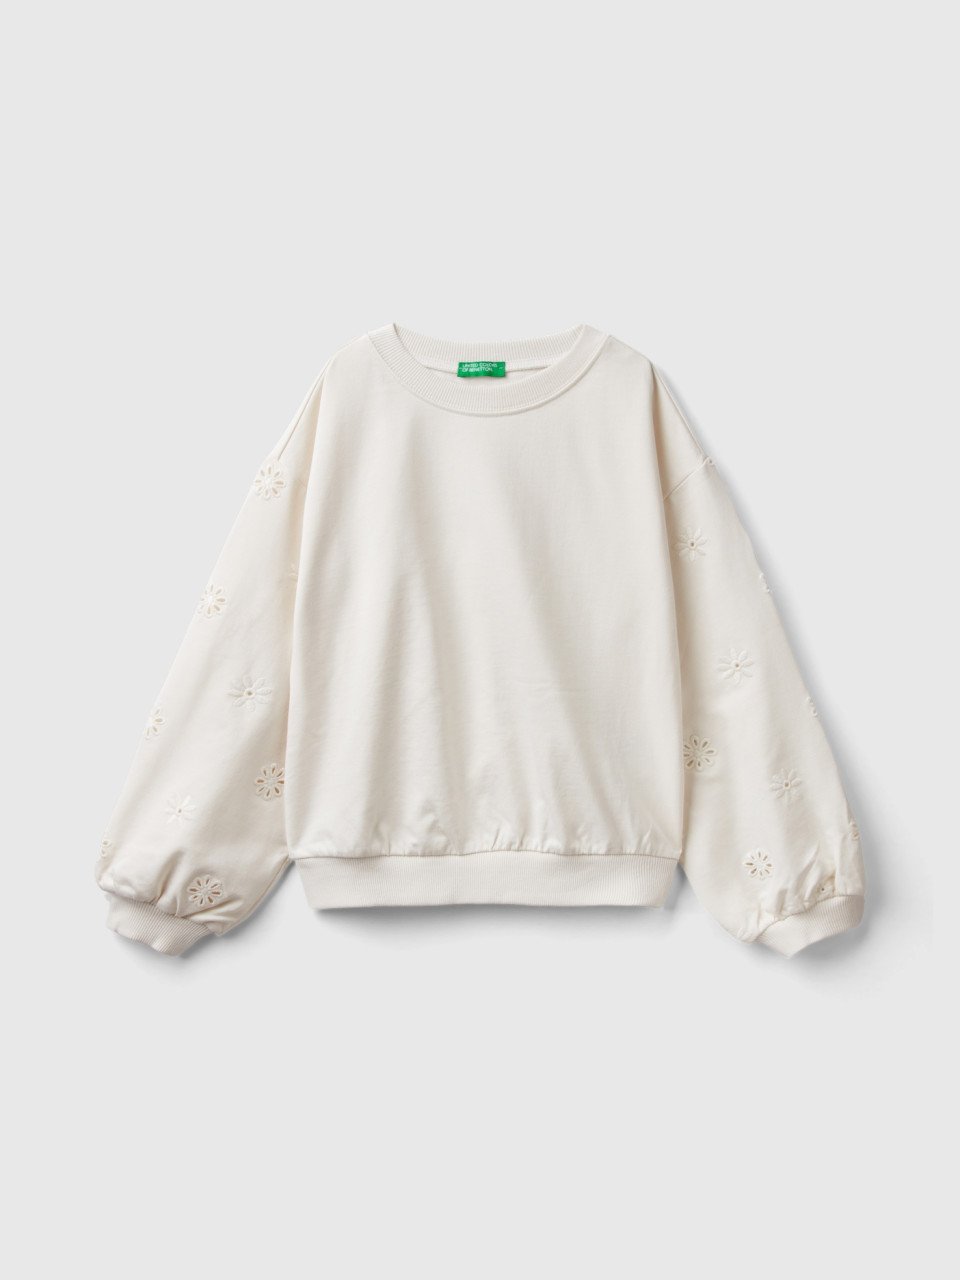 Benetton, Sweatshirt With Embroidered Flowers, Creamy White, Kids